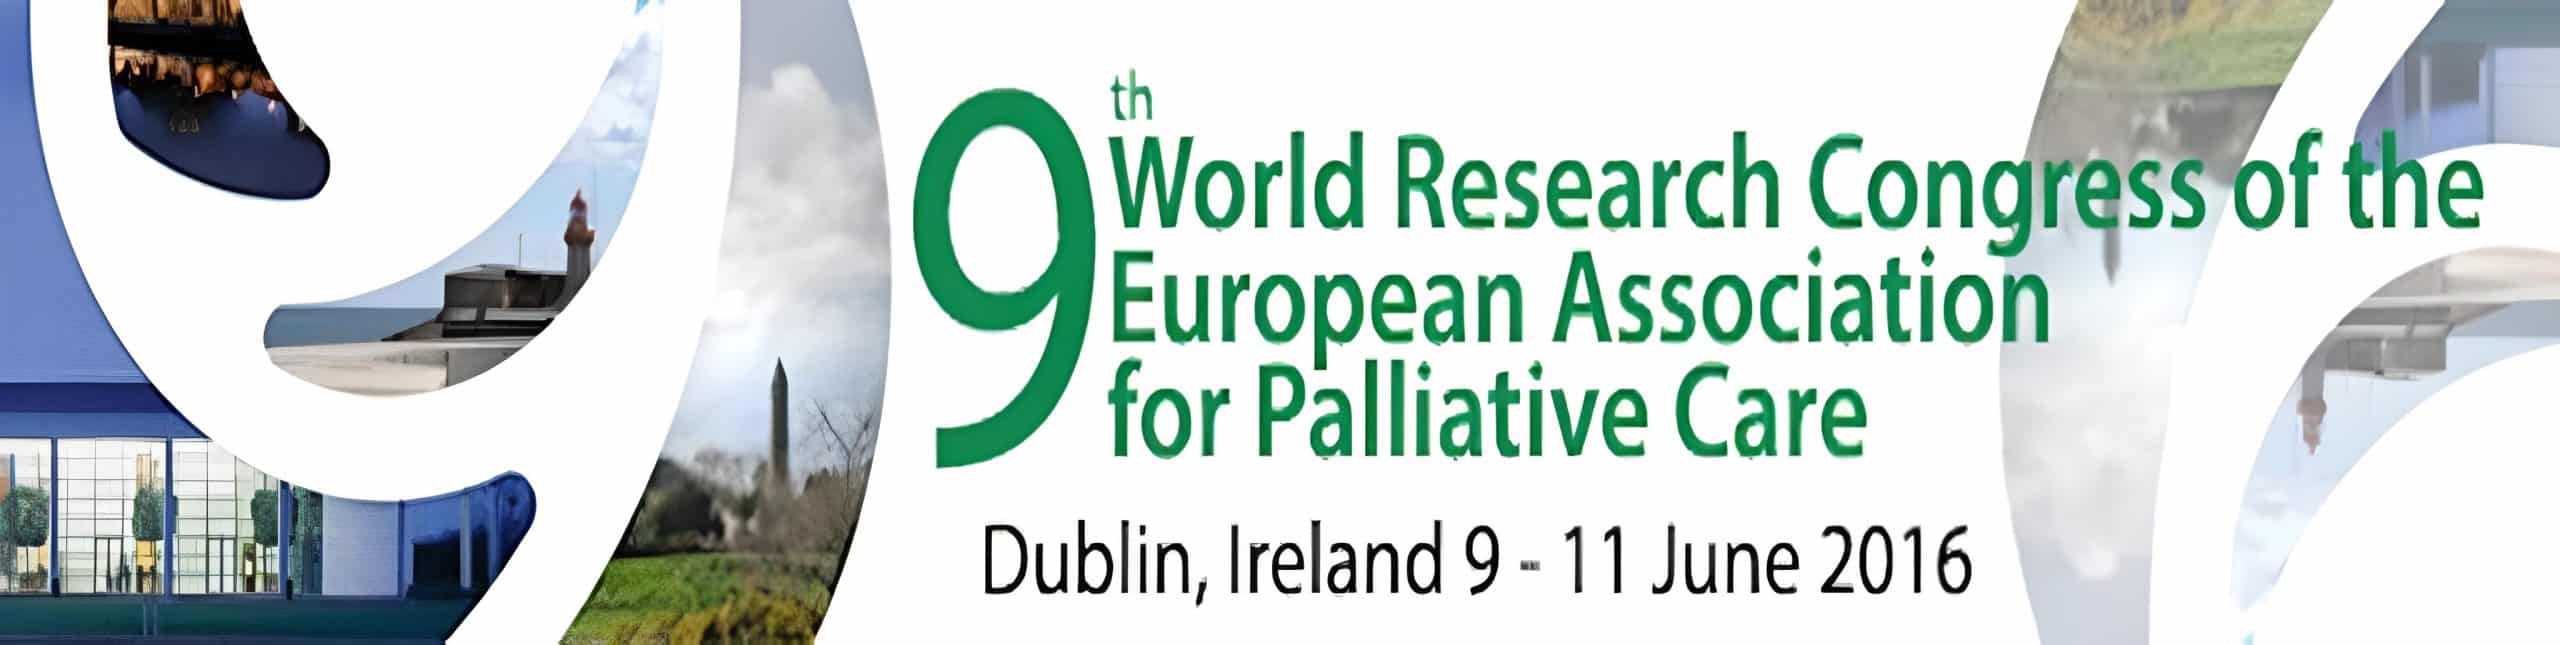 banner 9th world research congress of the EAPC Dublin 9-11 June 2016